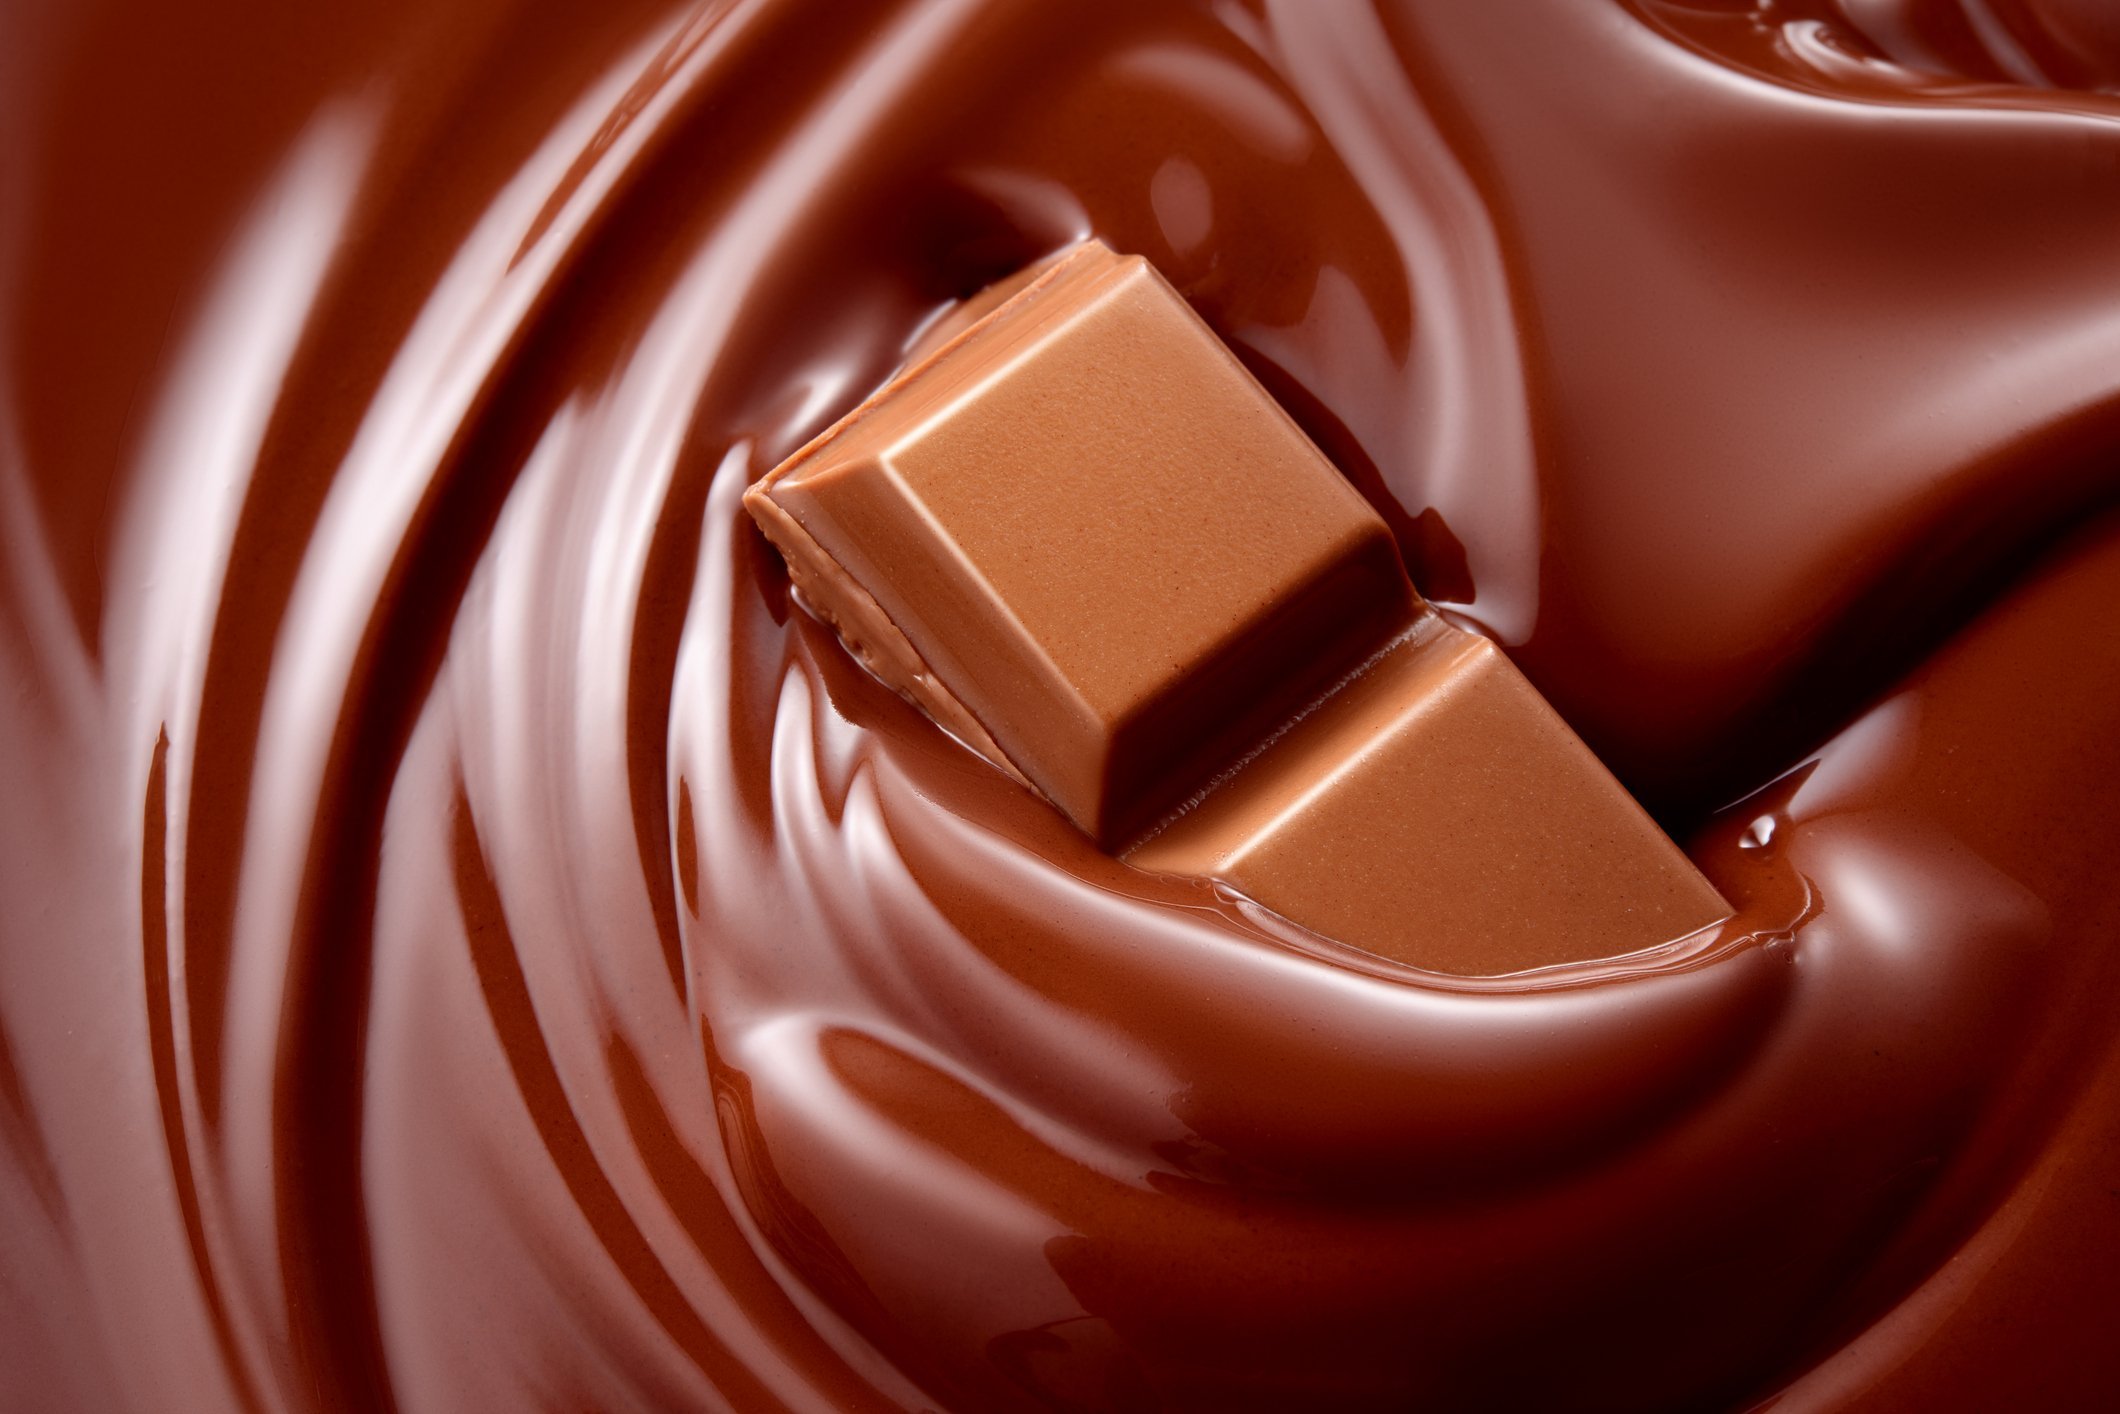 Chocolate pictures. Молочный шоколад. Красивый шоколад. Шоколадный фон. Жидкий шоколад.